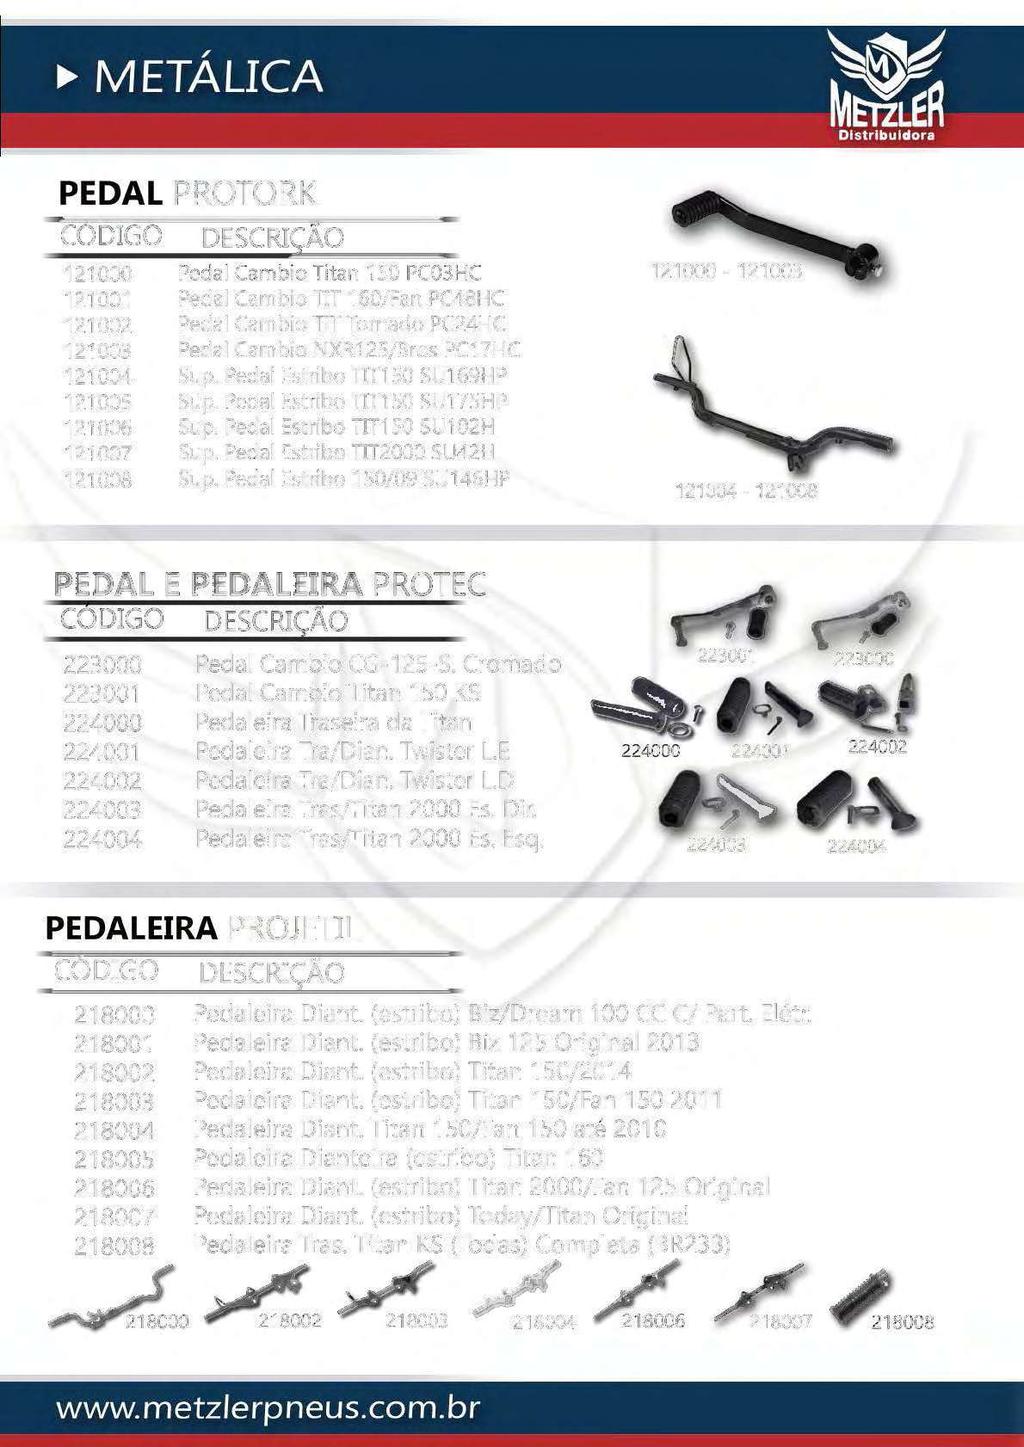 PEDAL PROTORK 121000 121001 121002 121003 121004 121005 121006 121007 121008 Pedal Cambio Titan 150 PC03HC Pedal Cambio TIT 160/Fan PC48HC Pedal Cambio TIT Tornado PC24HC Pedal Cambio NXR125/Bros